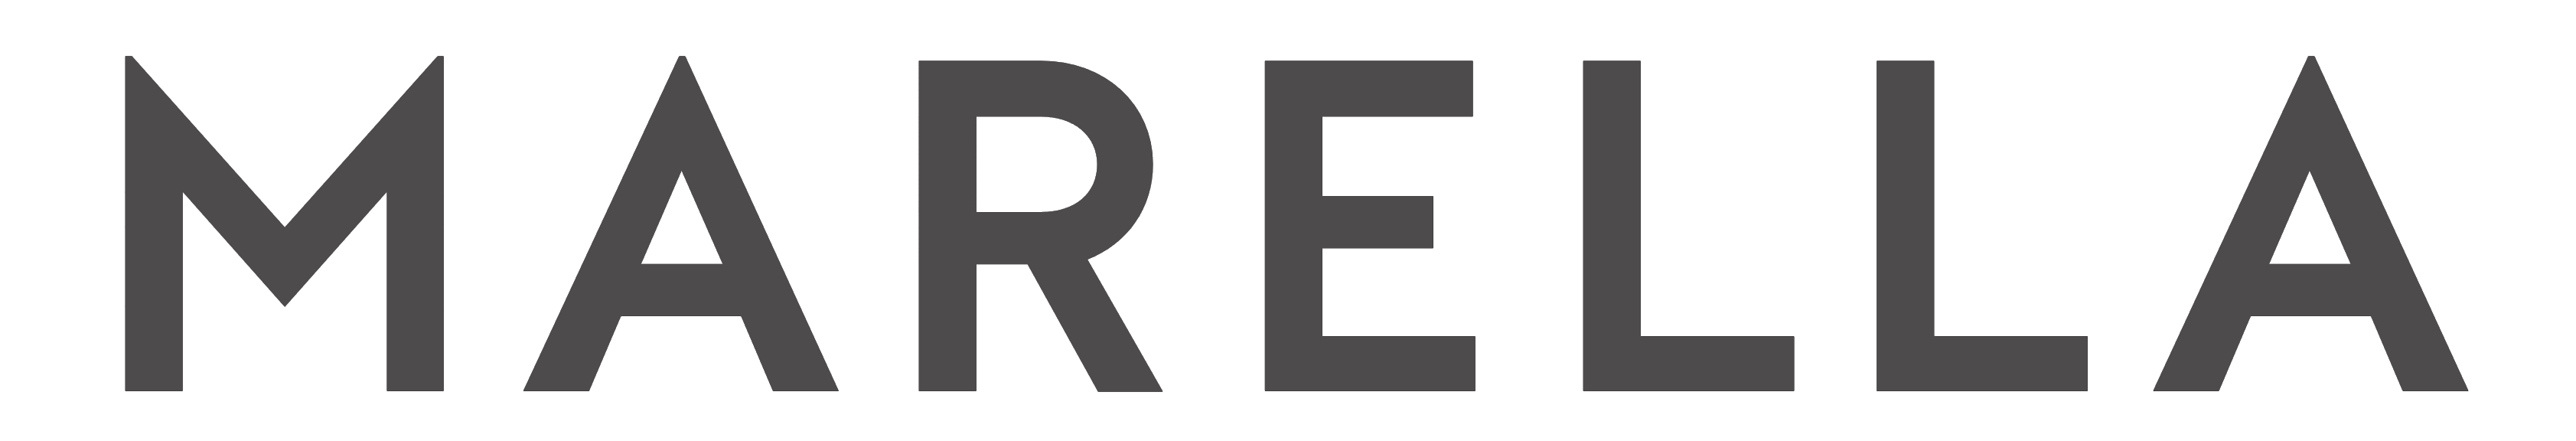 Marella logo, logotype